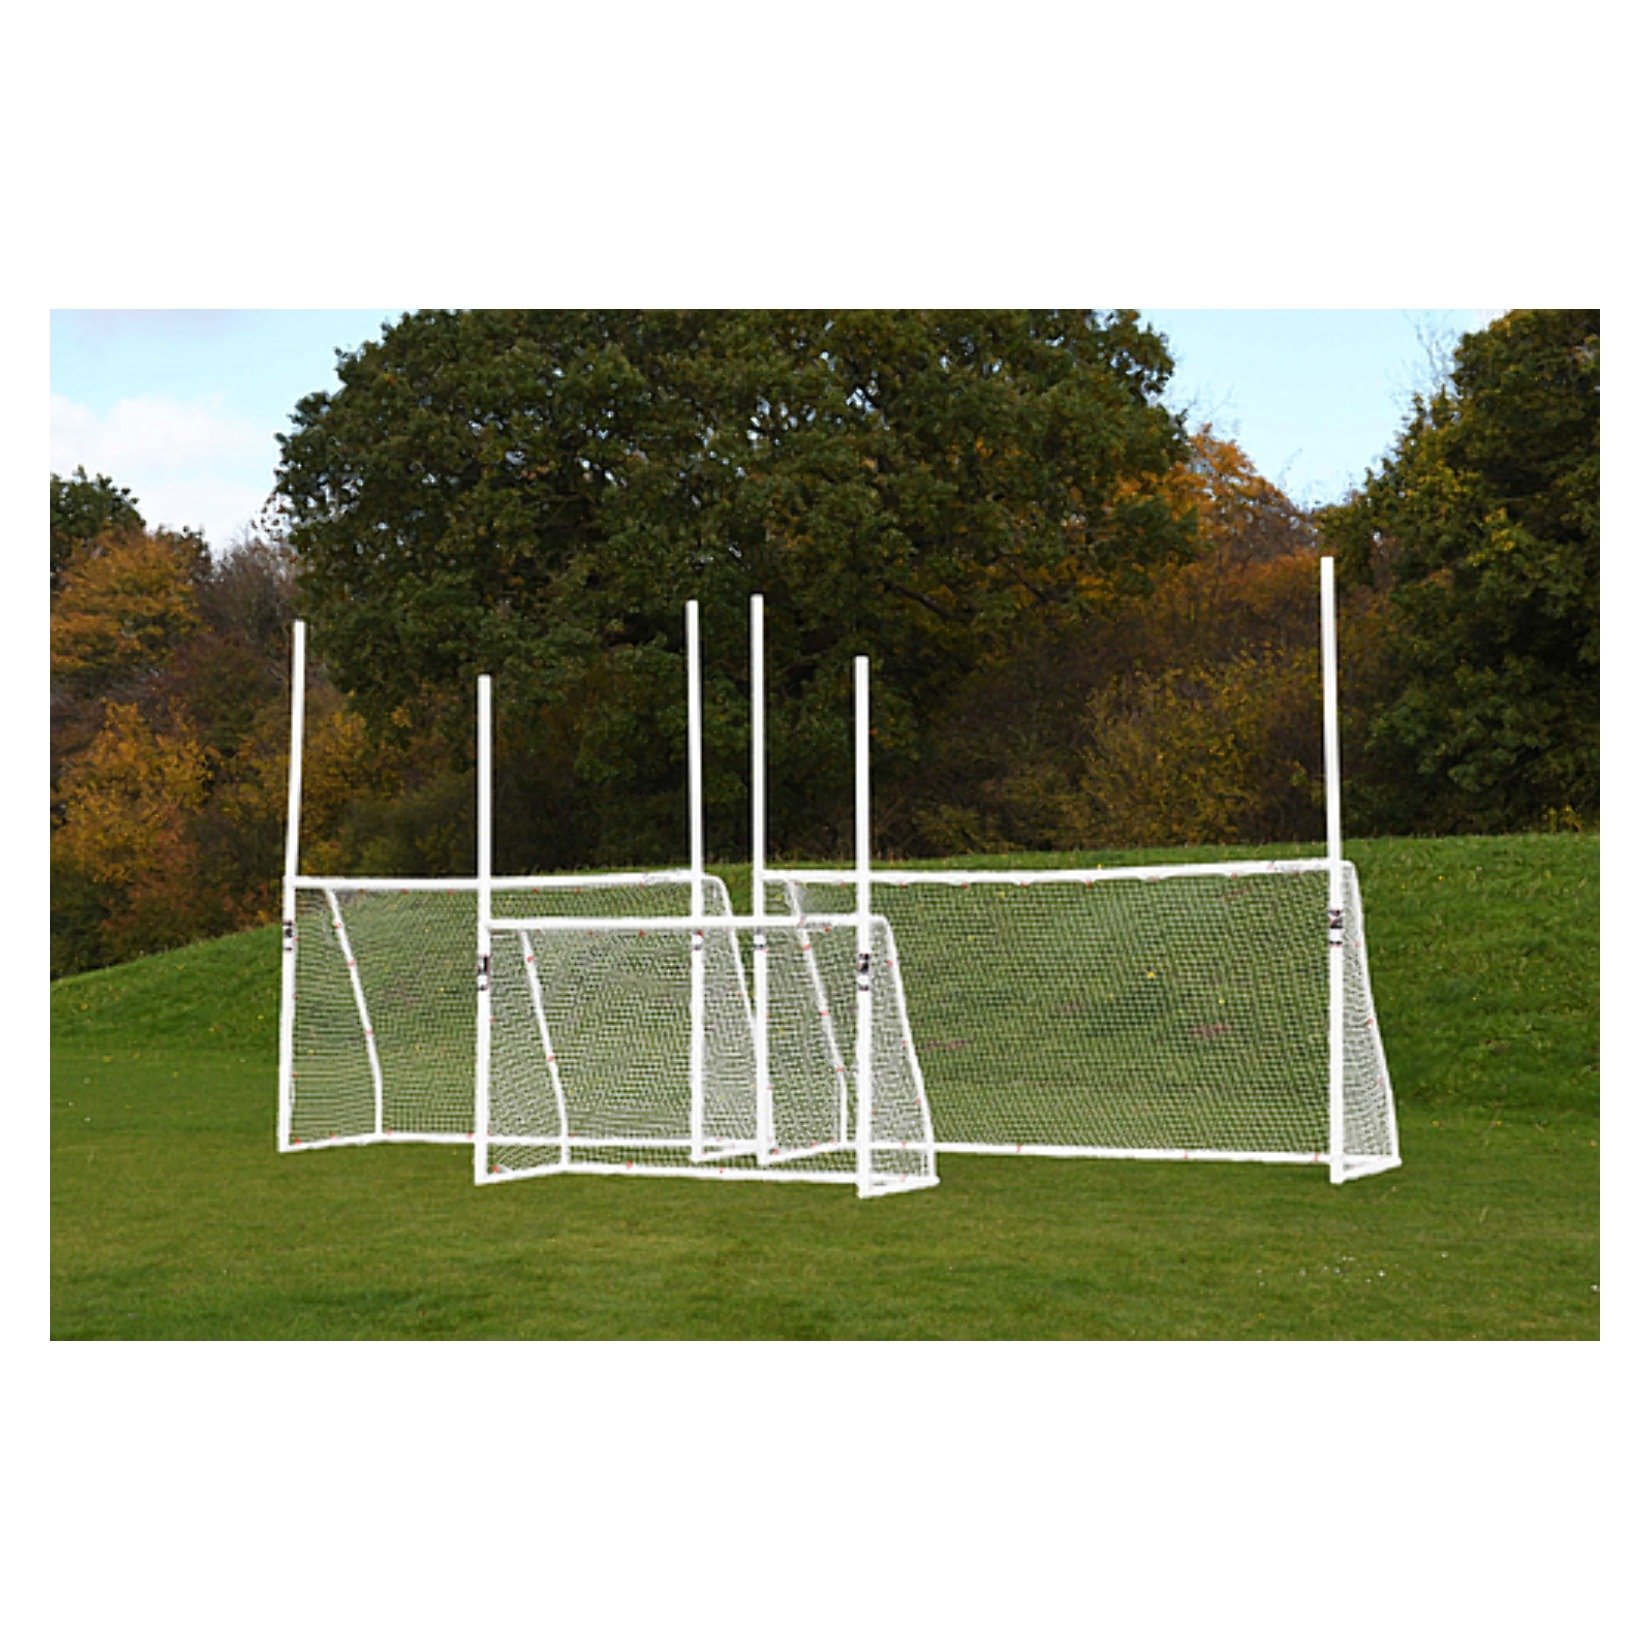 Precision GAA Match Goal Posts 8ft x 5ft